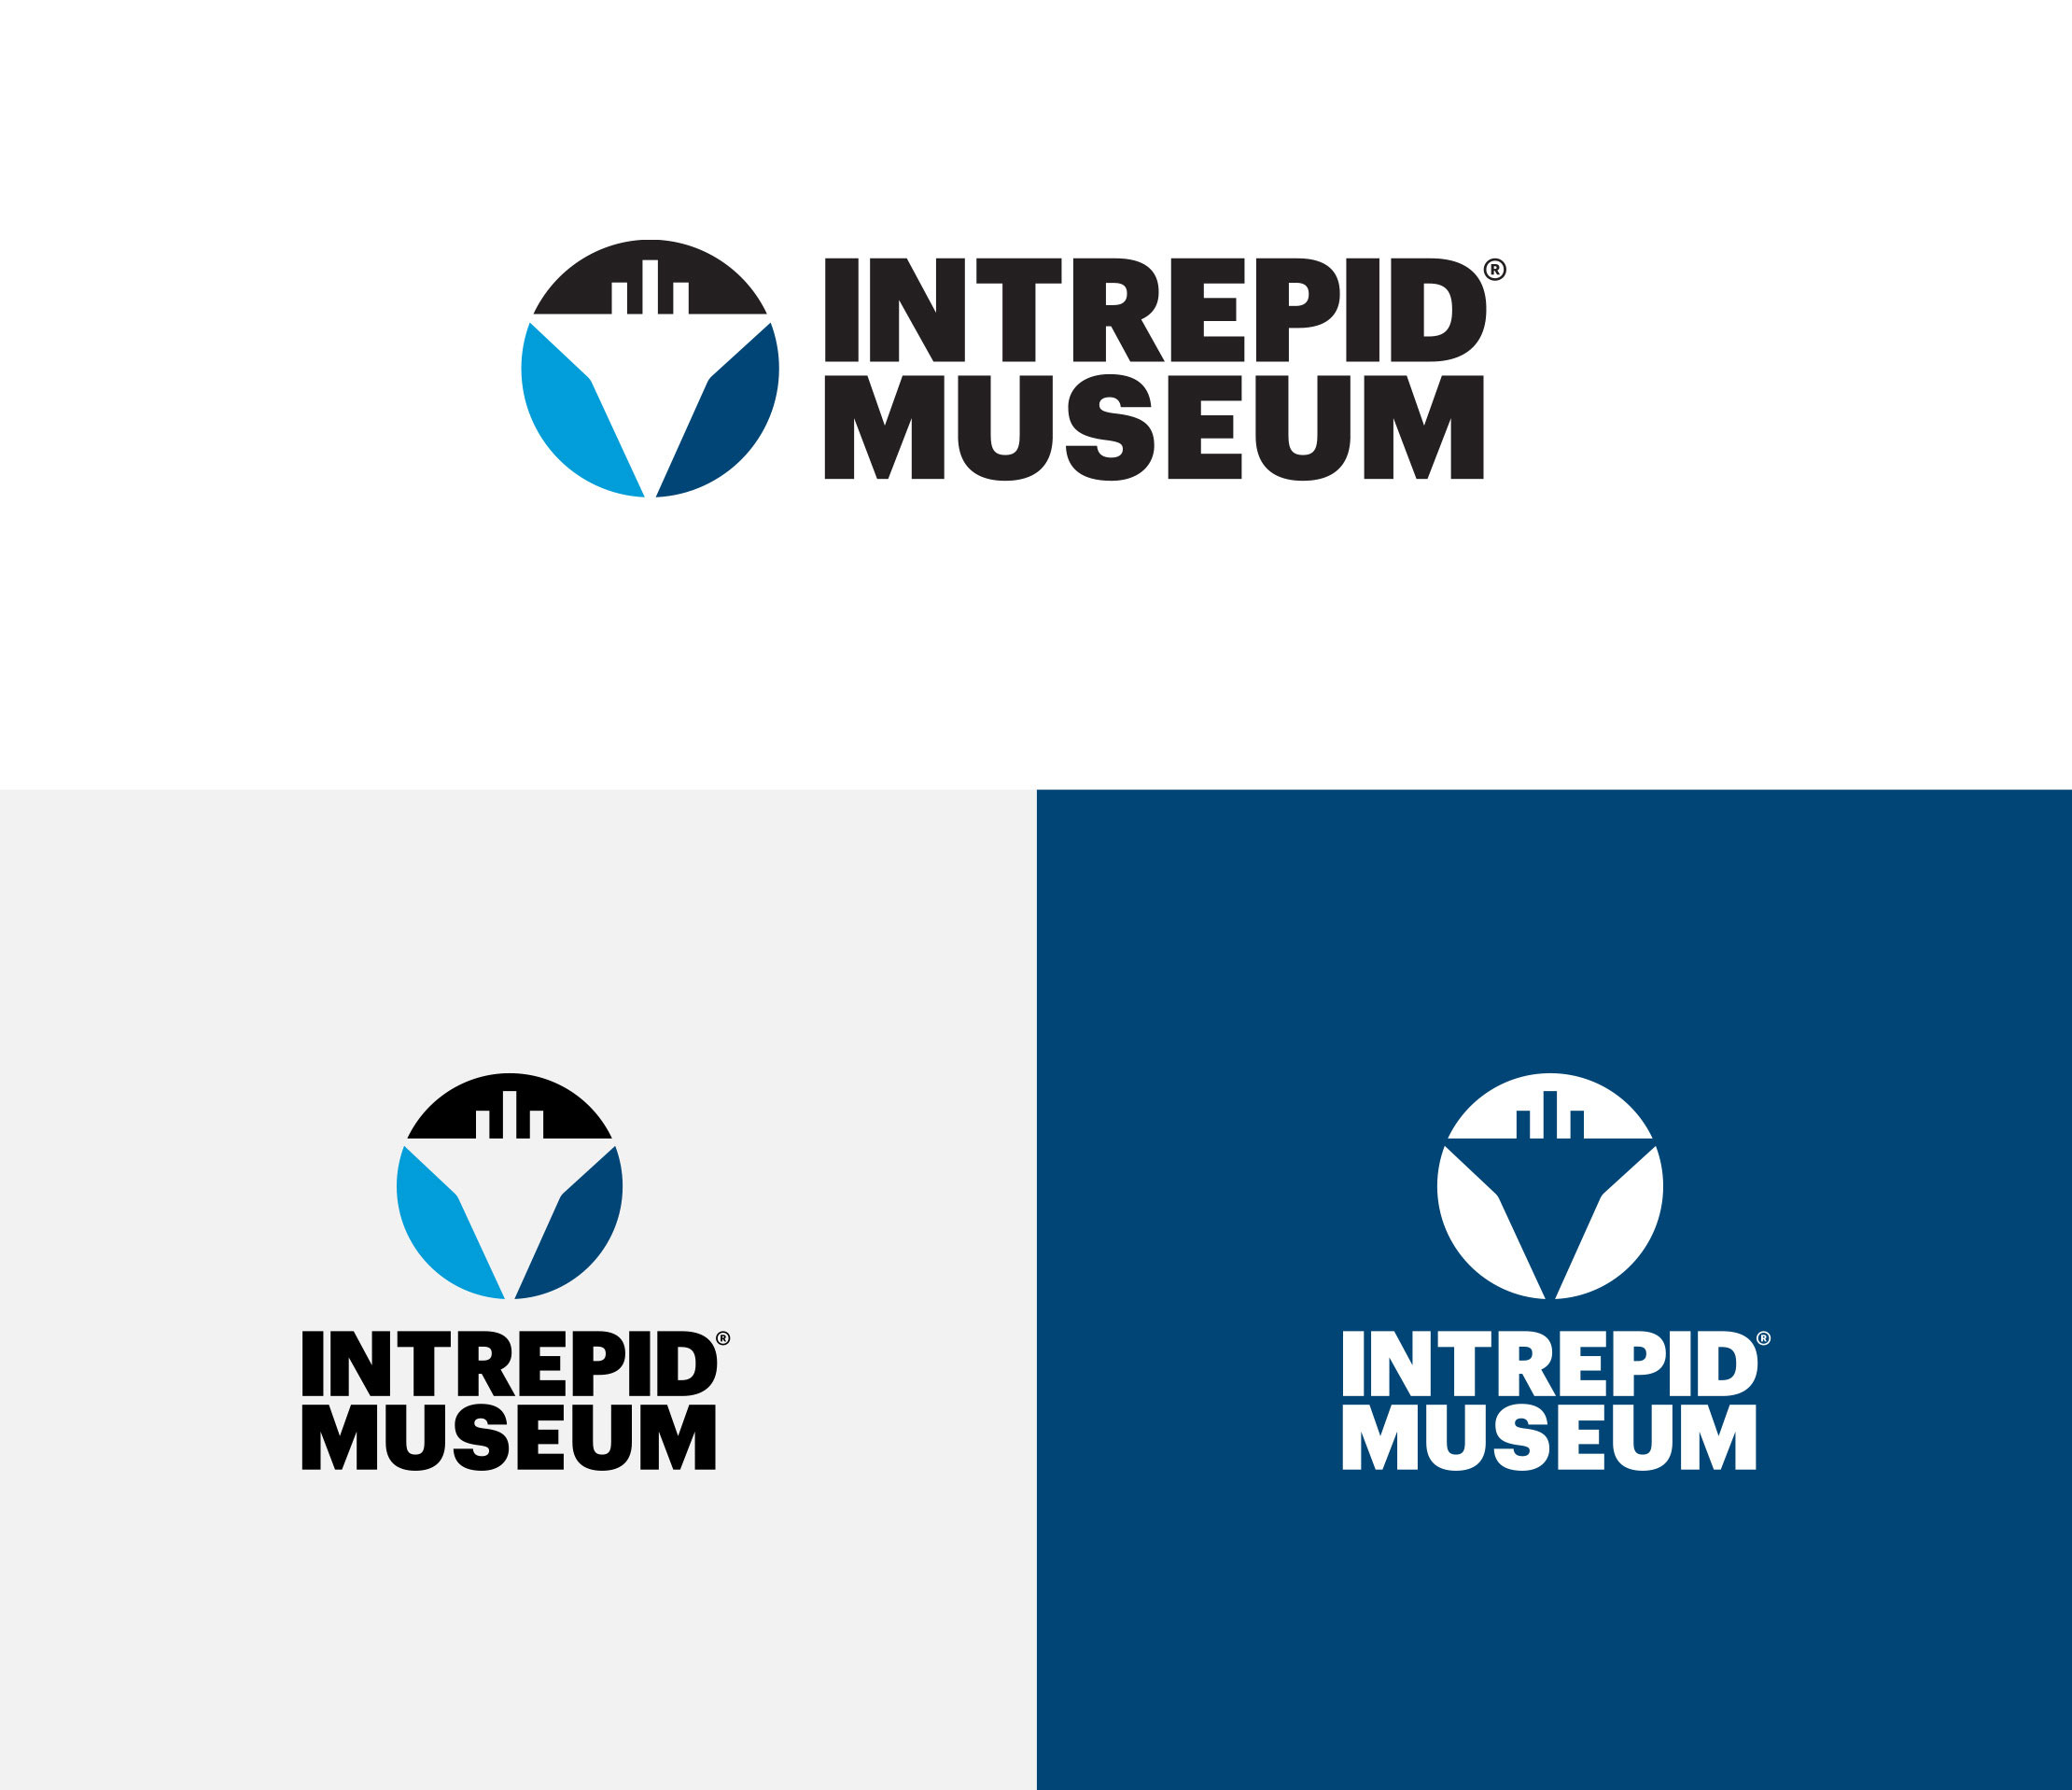 intrepid-museum-branding-3image-branding-agency-new-york